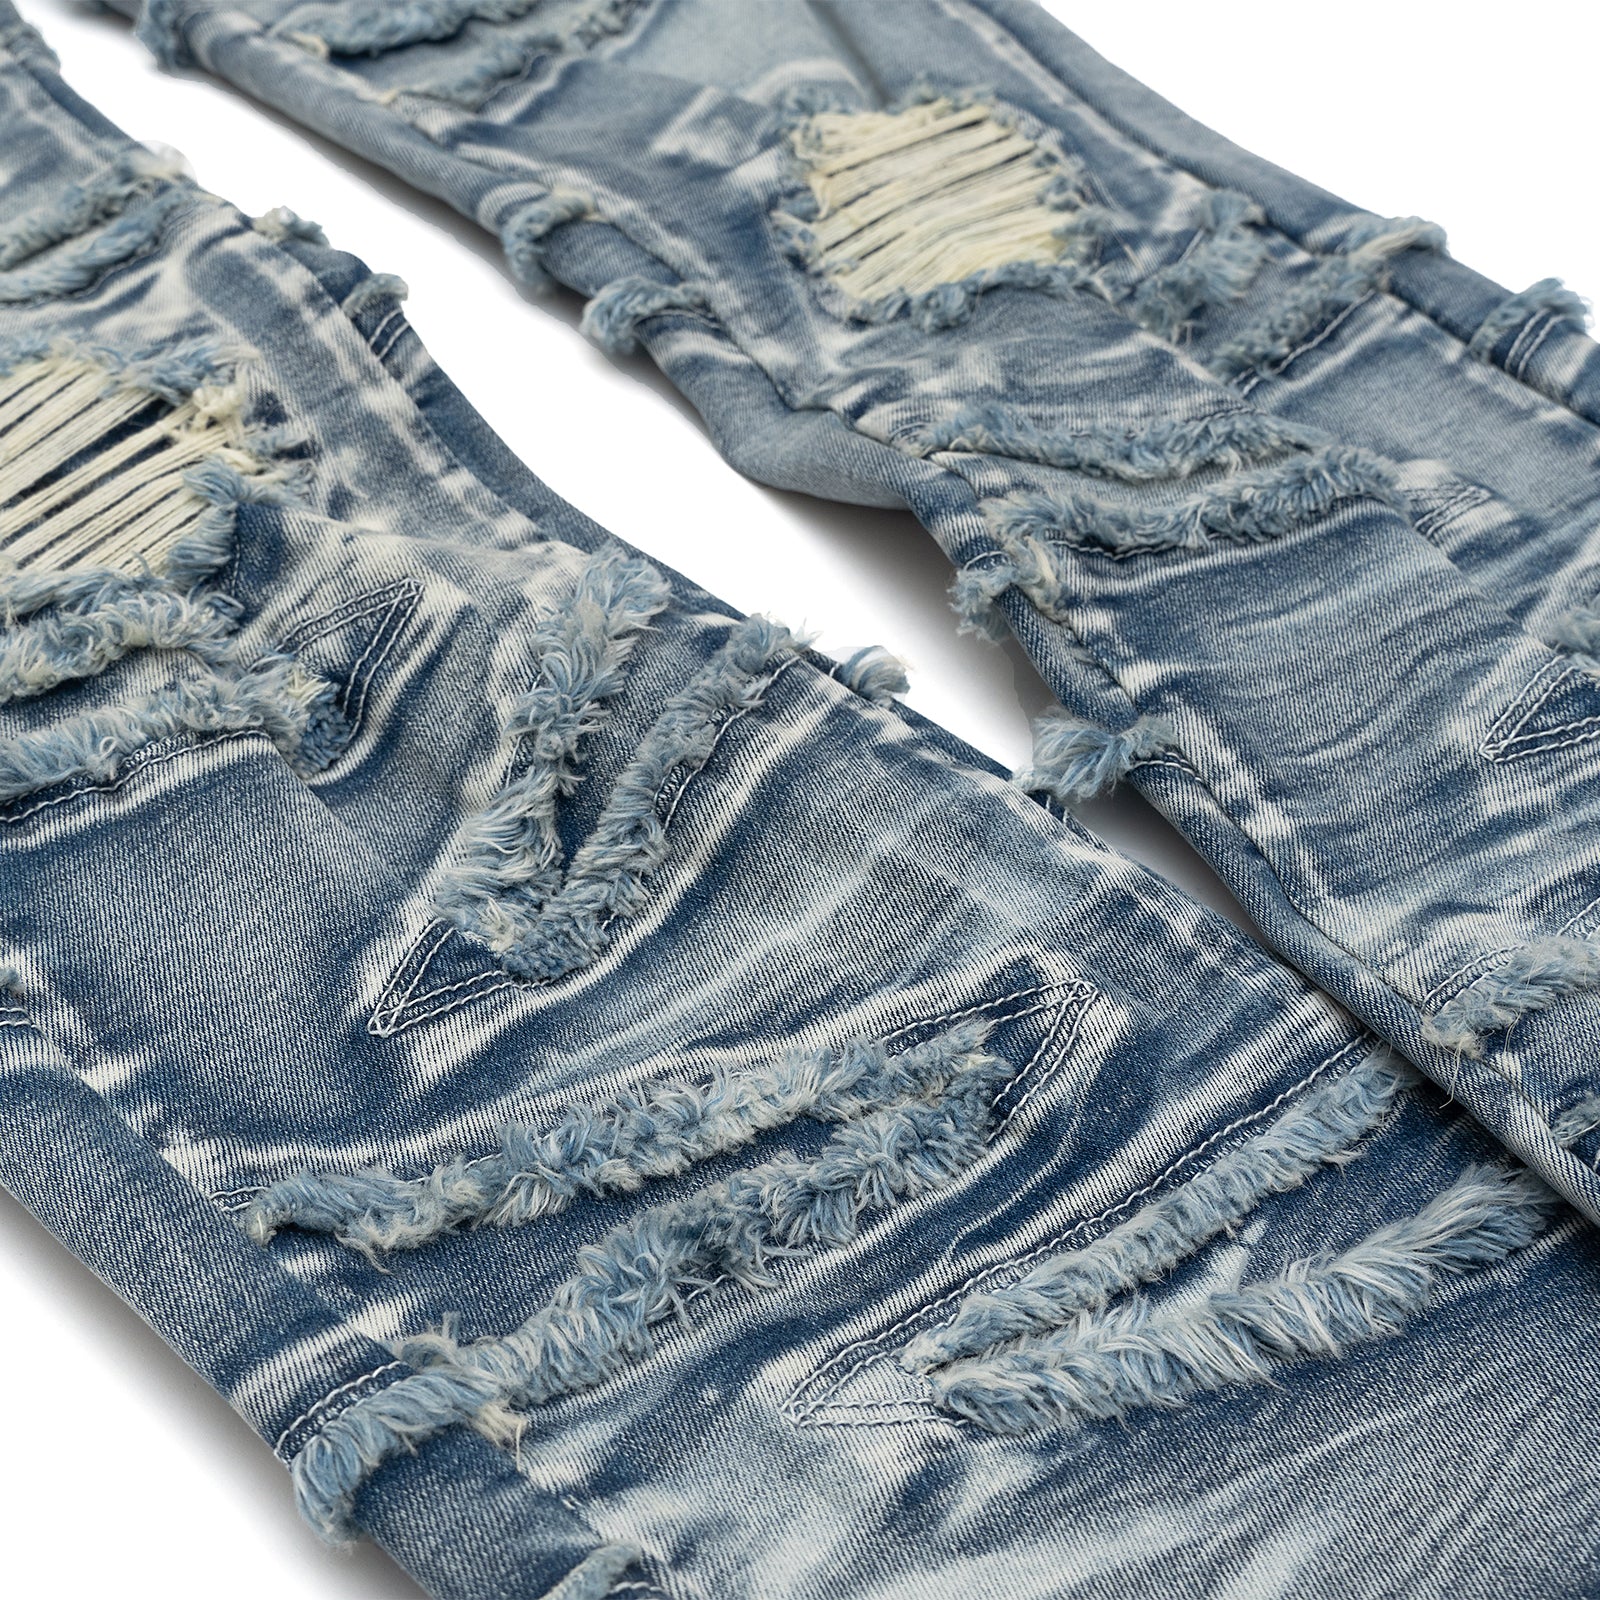 M1956 Lombardi Jeans - Light Wash